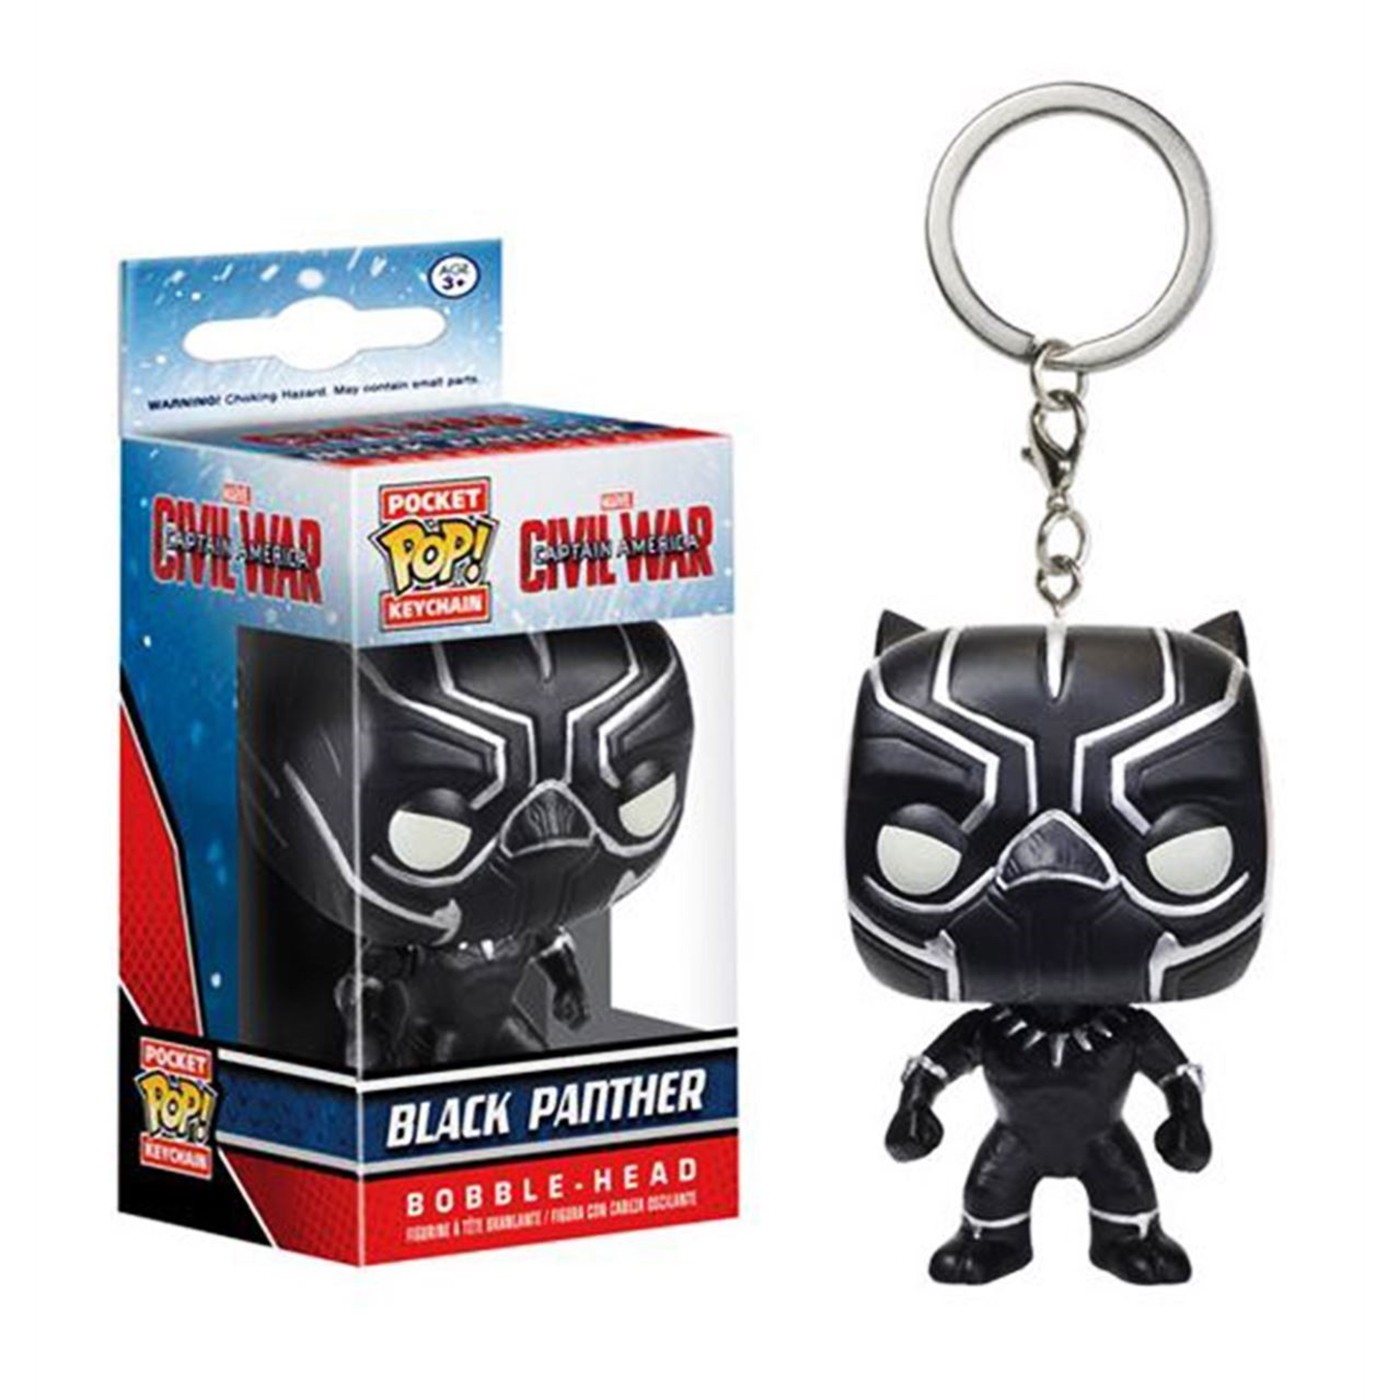 Captain America Civil War Black Panther Pop Keychain